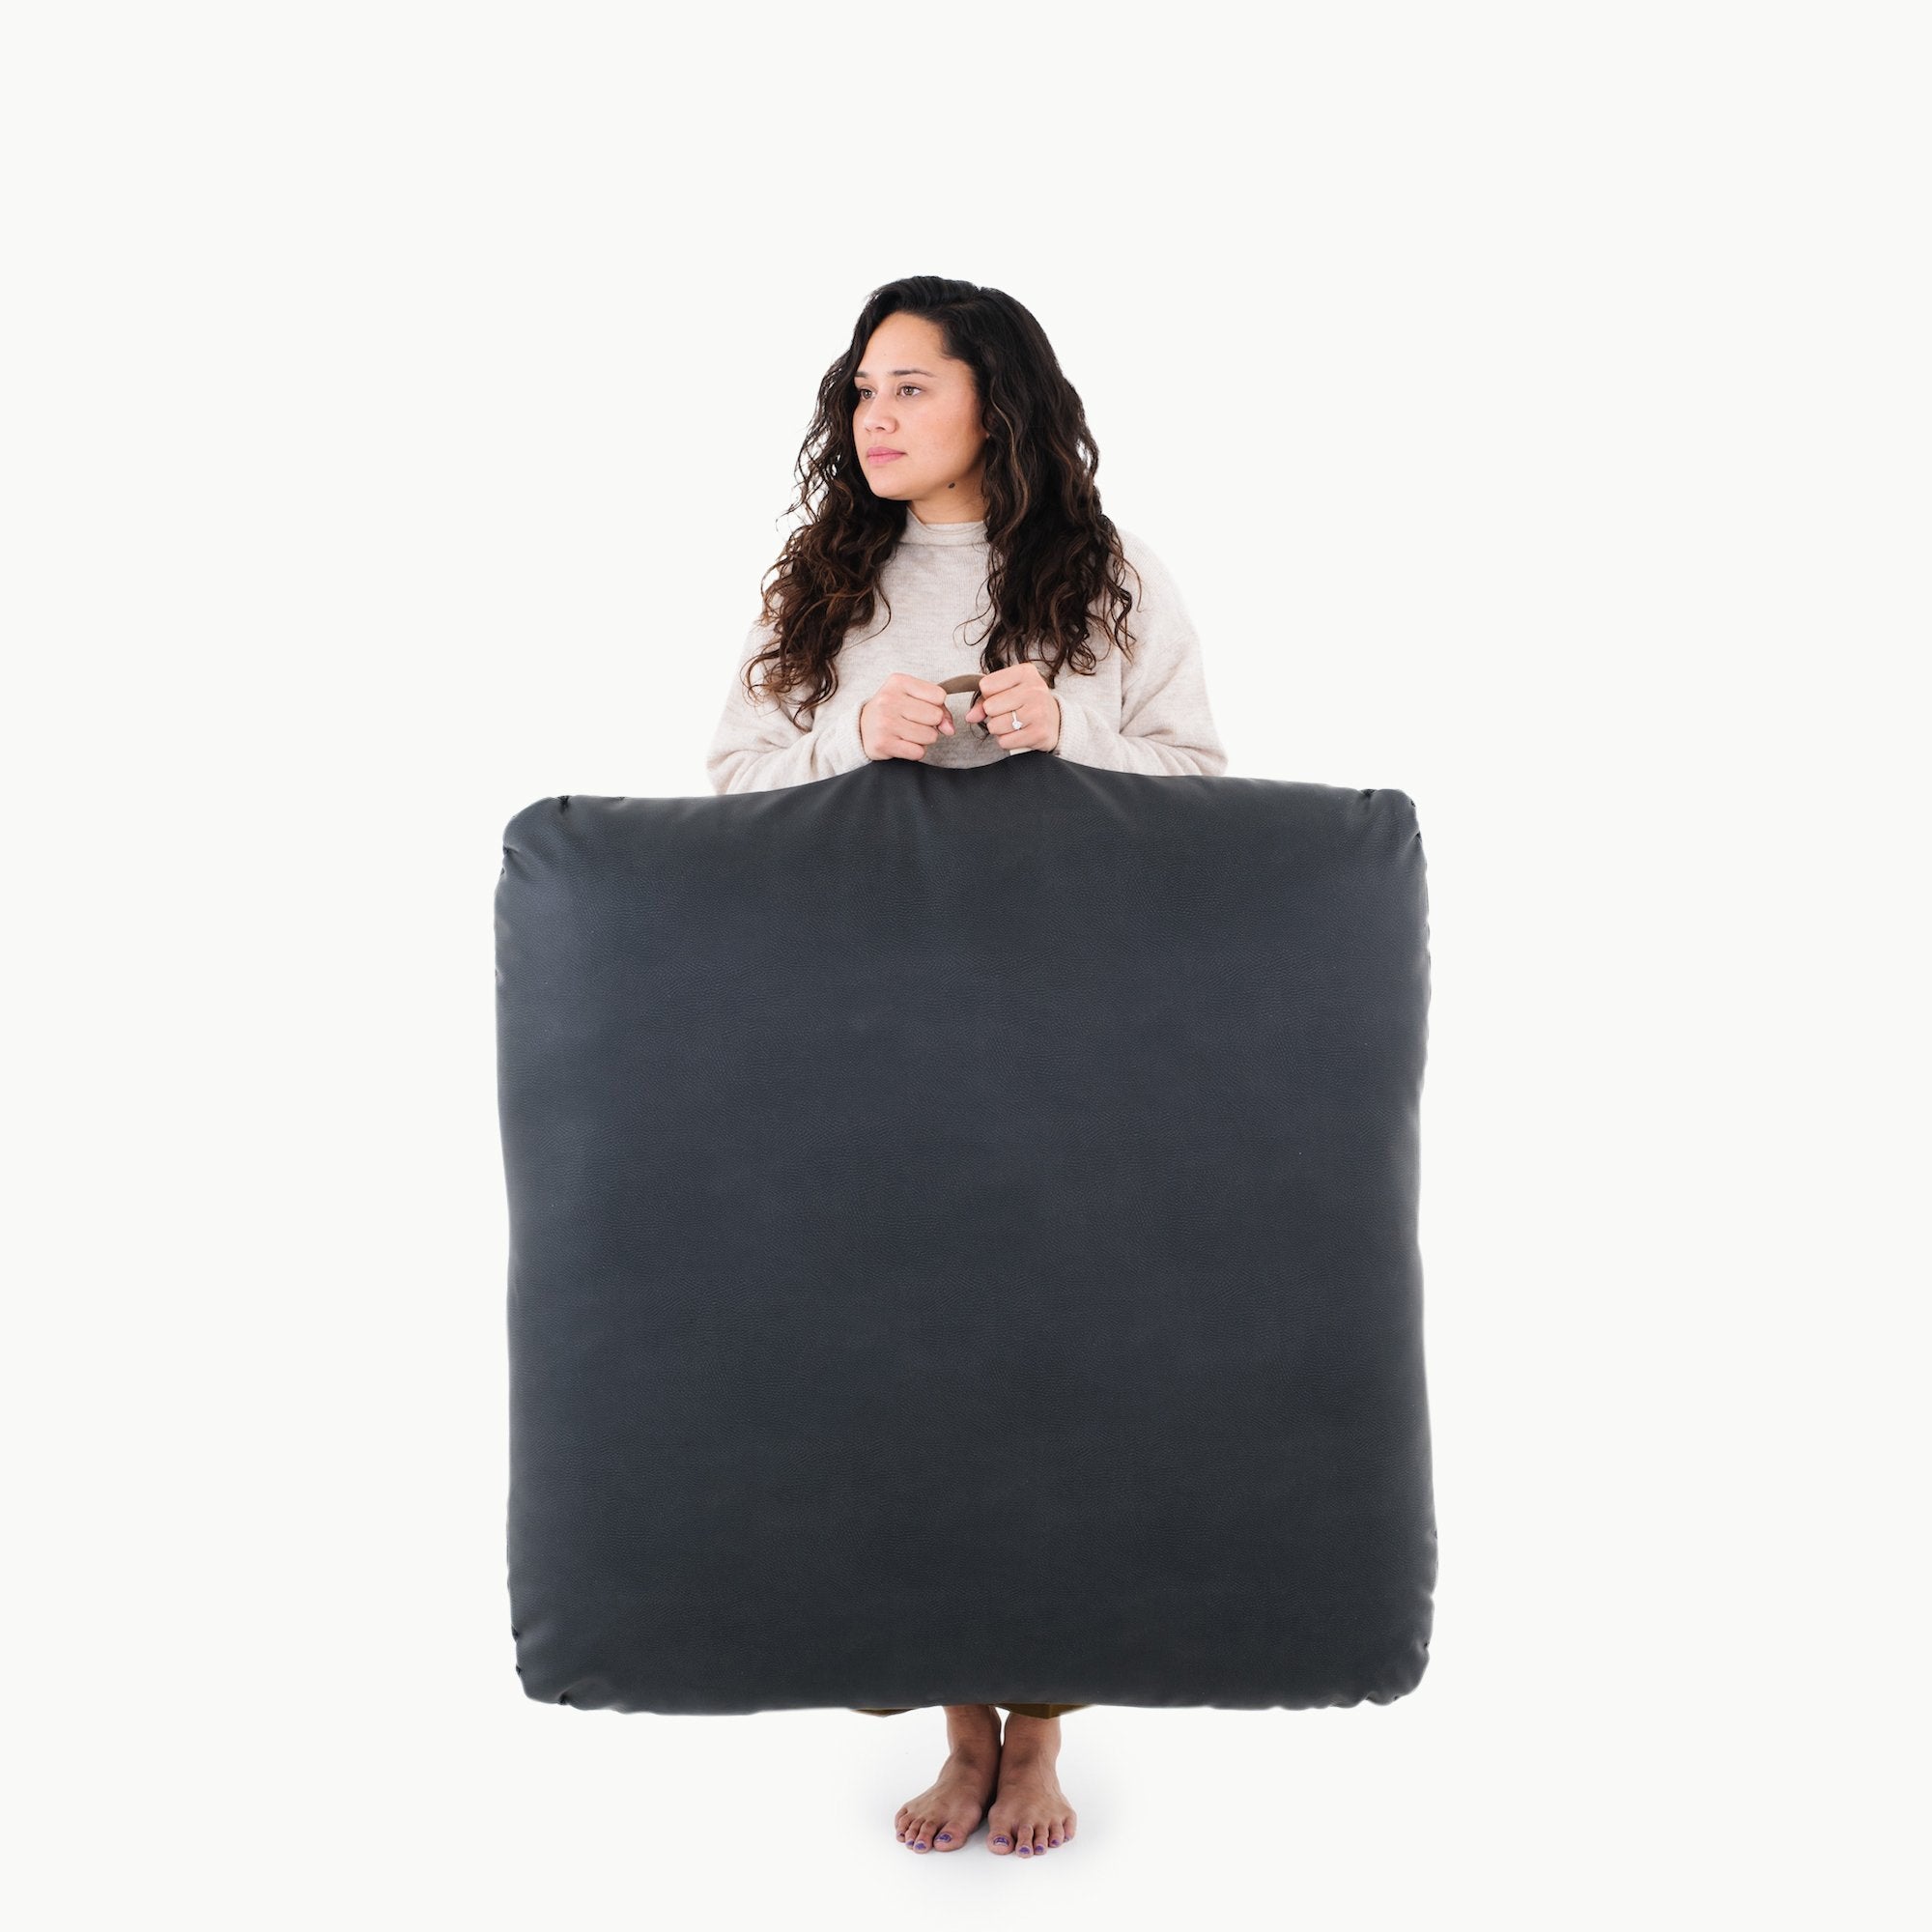 Raven / Square@Woman holding the Raven Square Floor Cushion